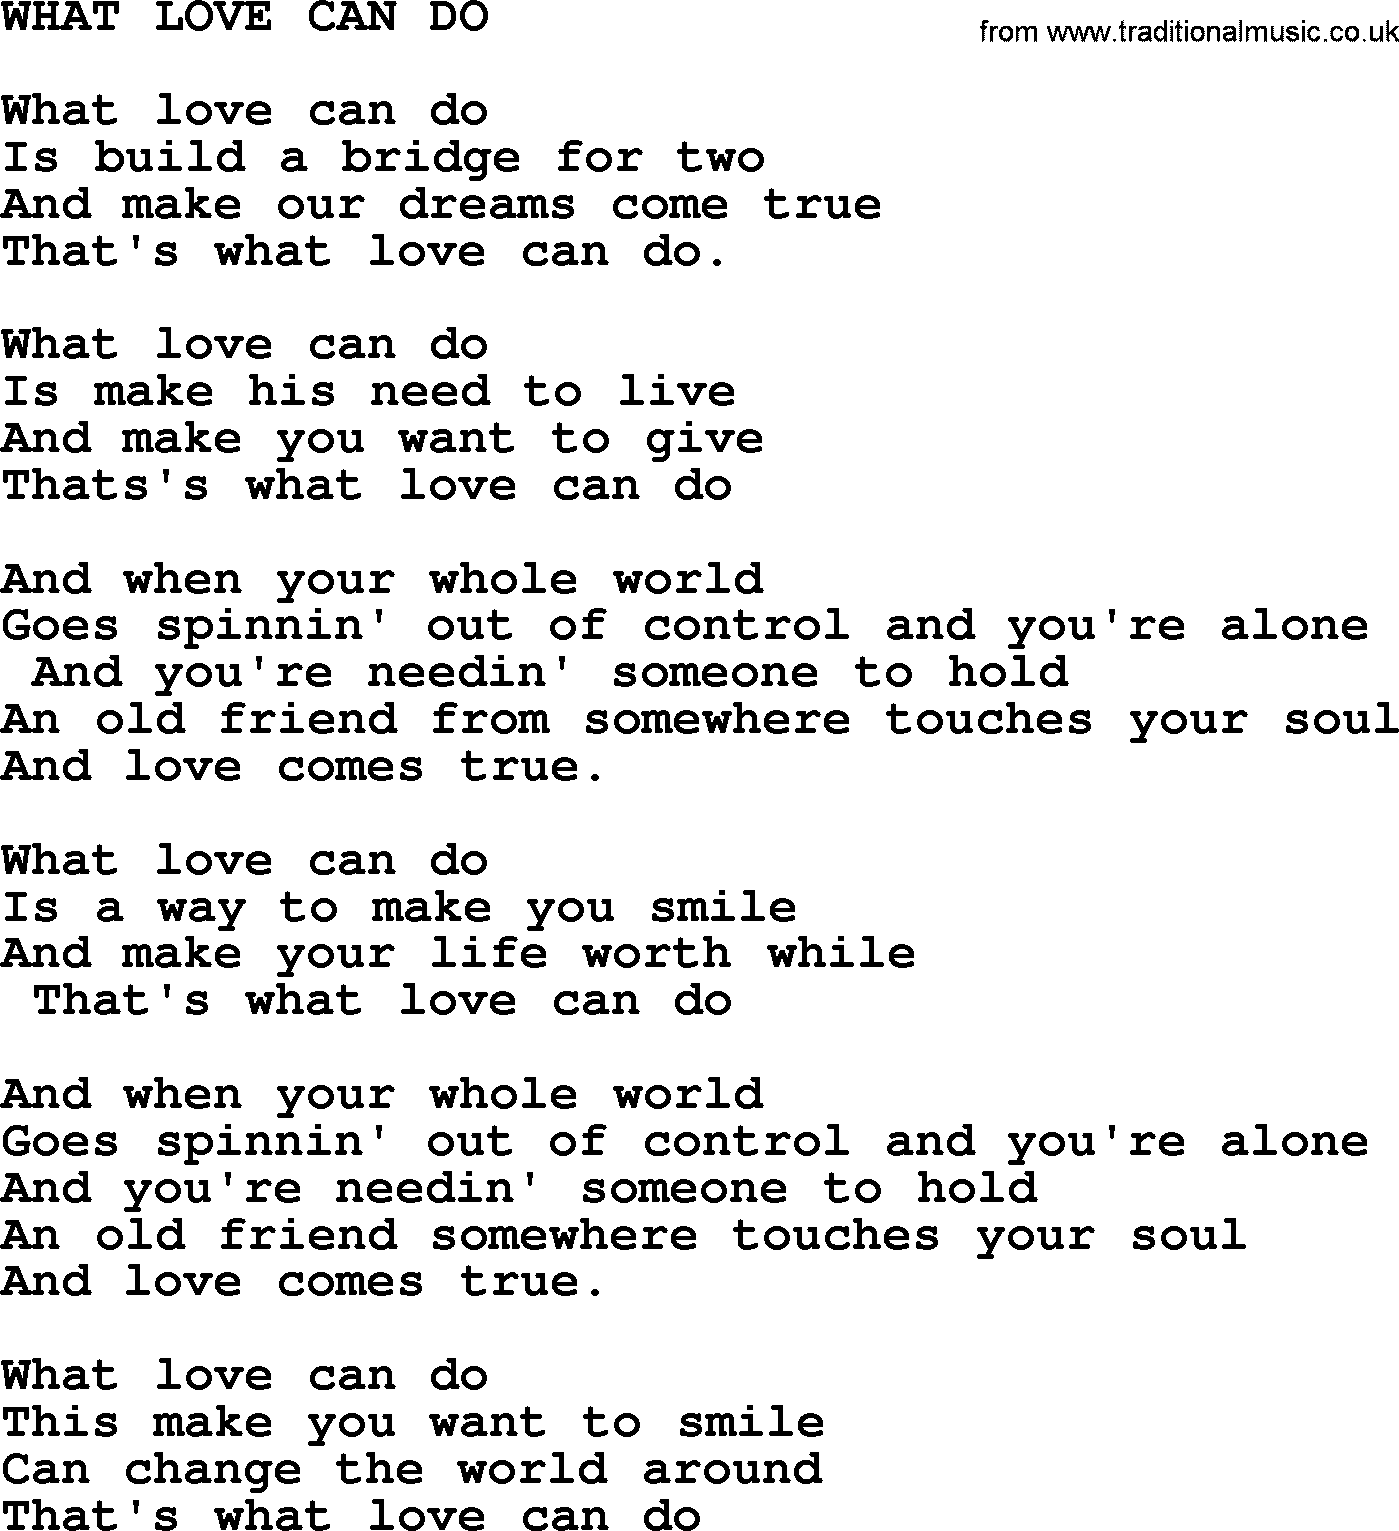 Merle Haggard song: What Love Can Do, lyrics.